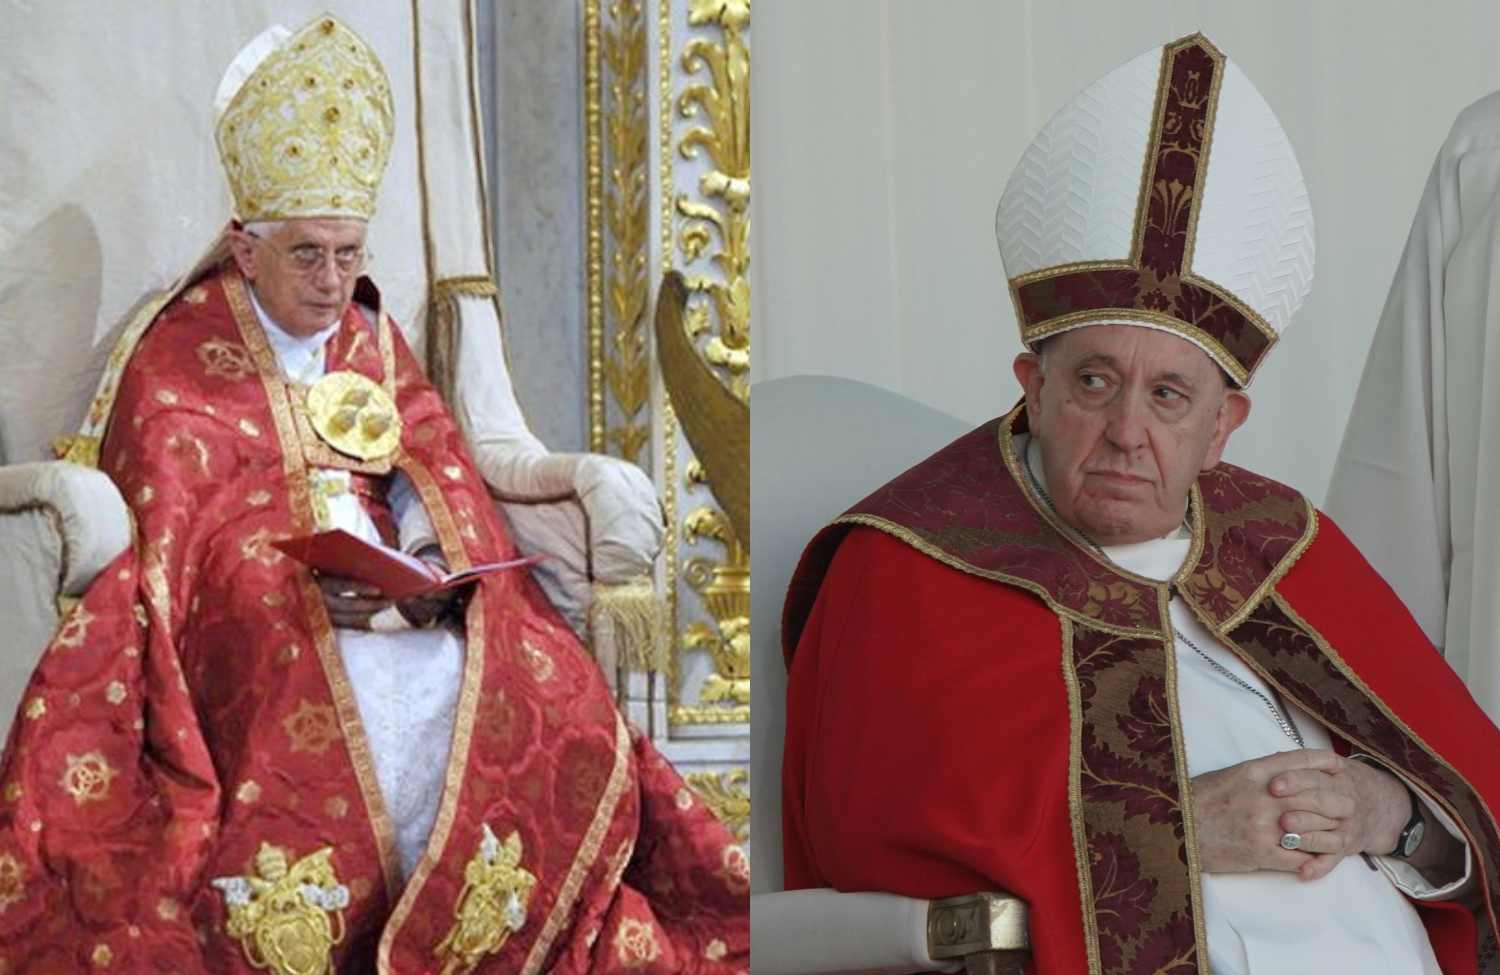 Fot. Benedykt XVI (CC BY-SA 3.0) i Franciszek (CC BY-SA 4.0)